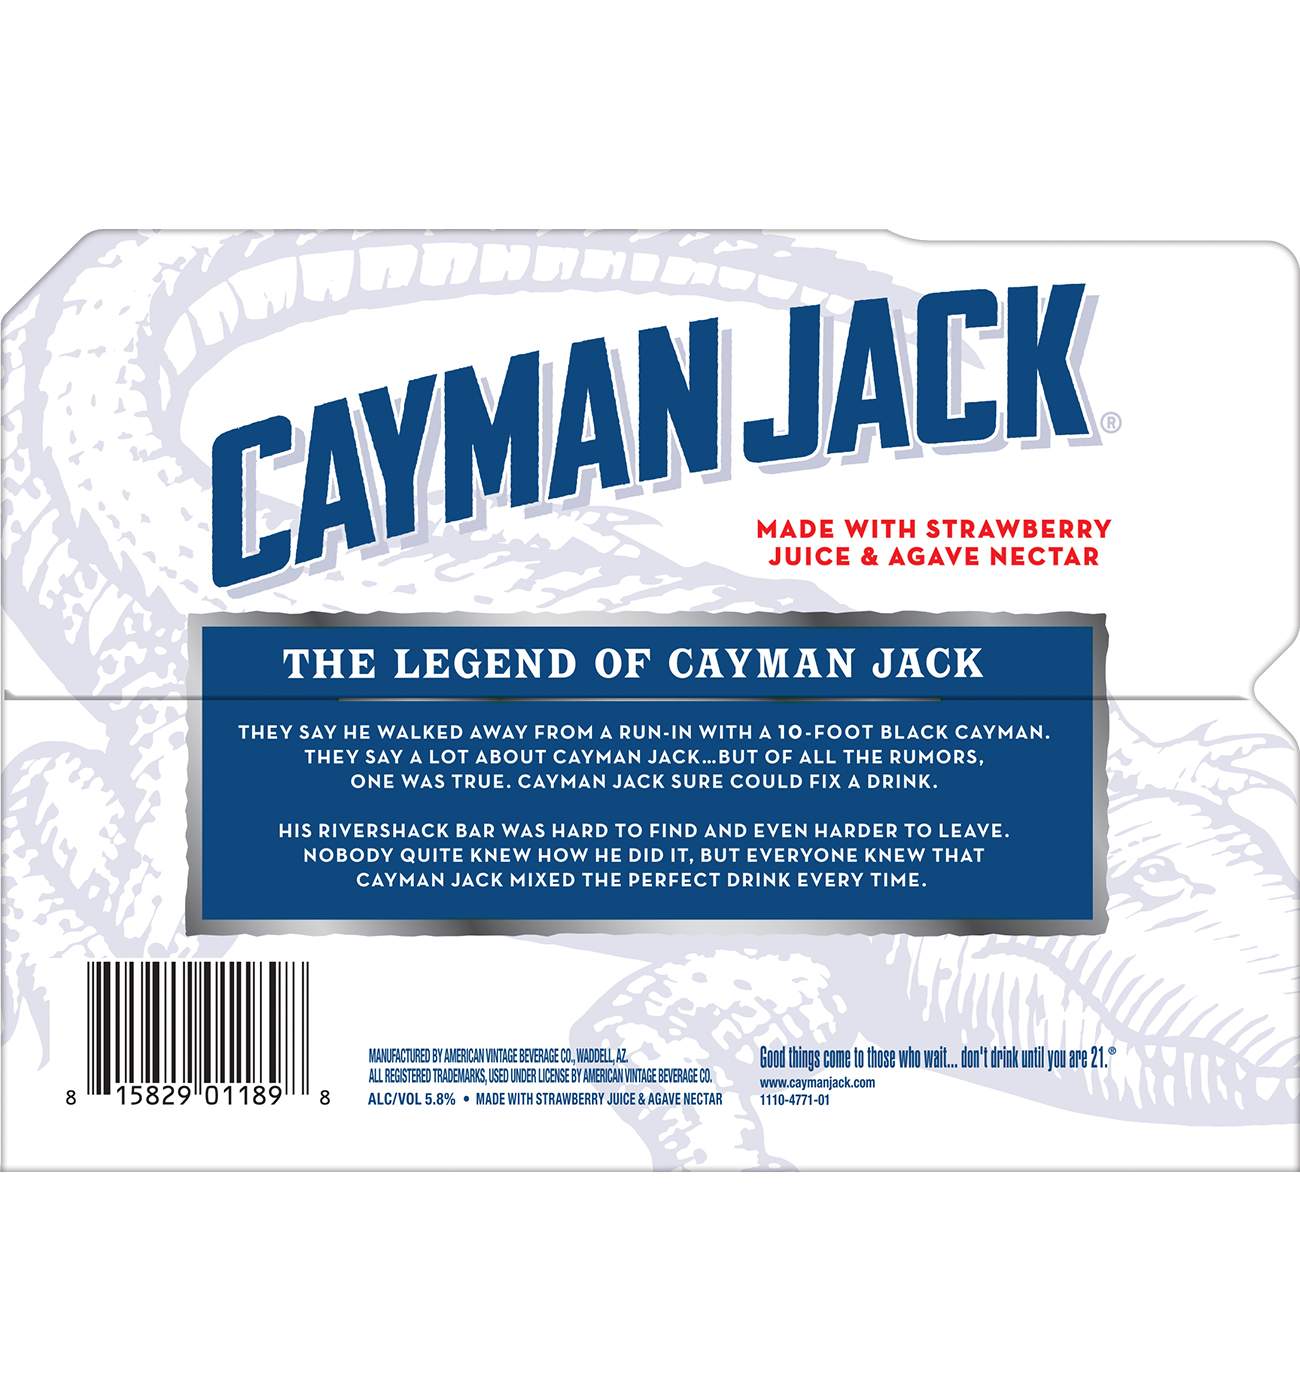 Cayman Jack Strawberry Margarita 6 pk Bottles; image 2 of 4